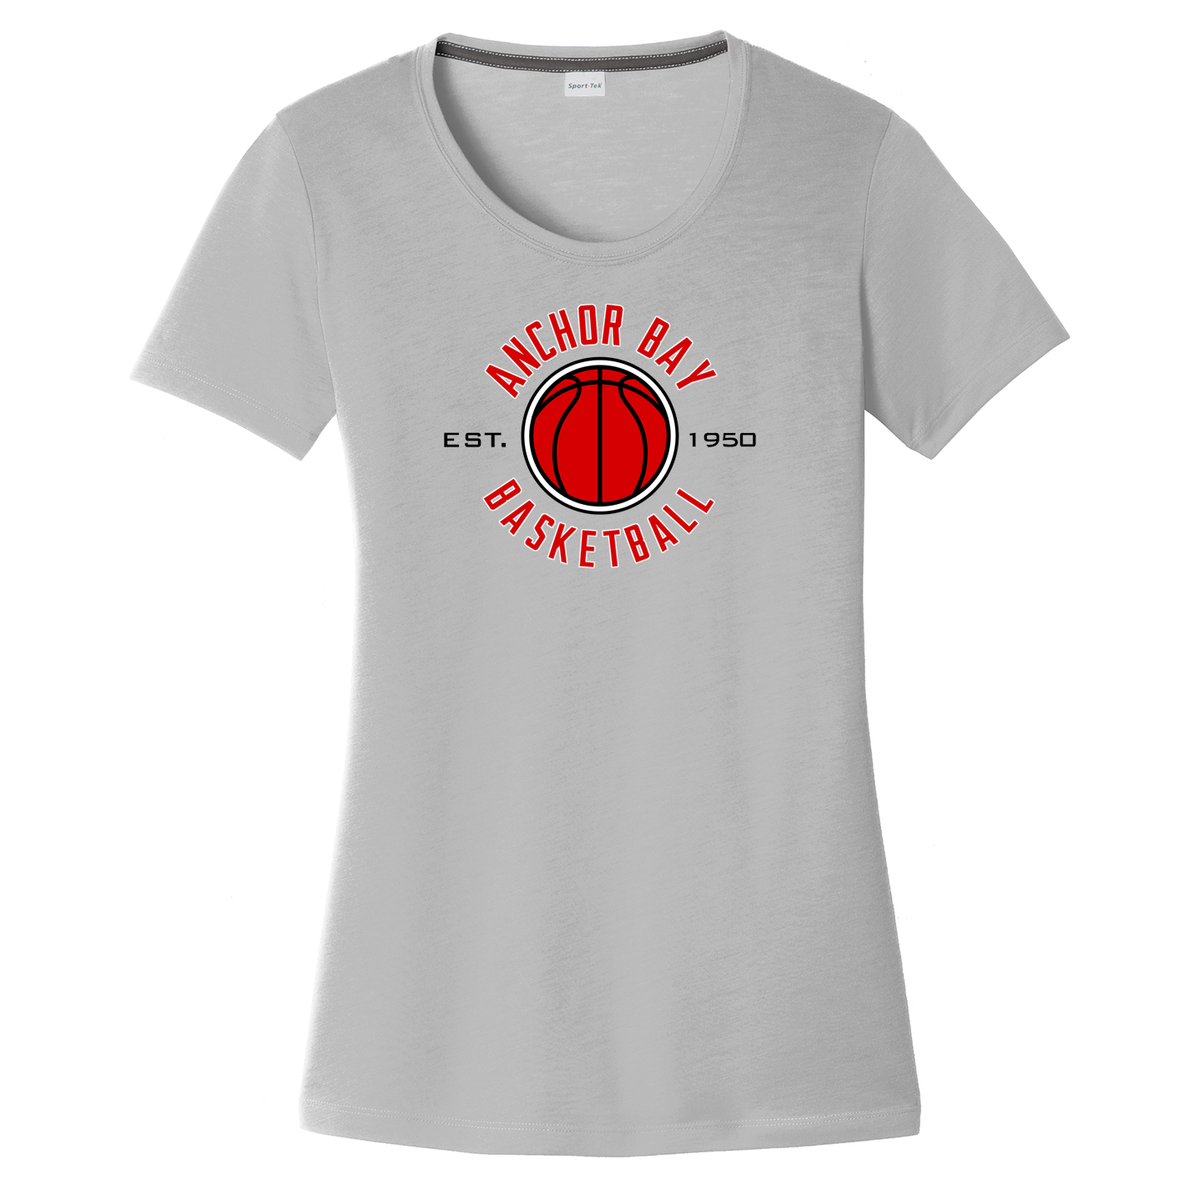 Anchor Bay Basketball Women's CottonTouch Performance T-Shirt